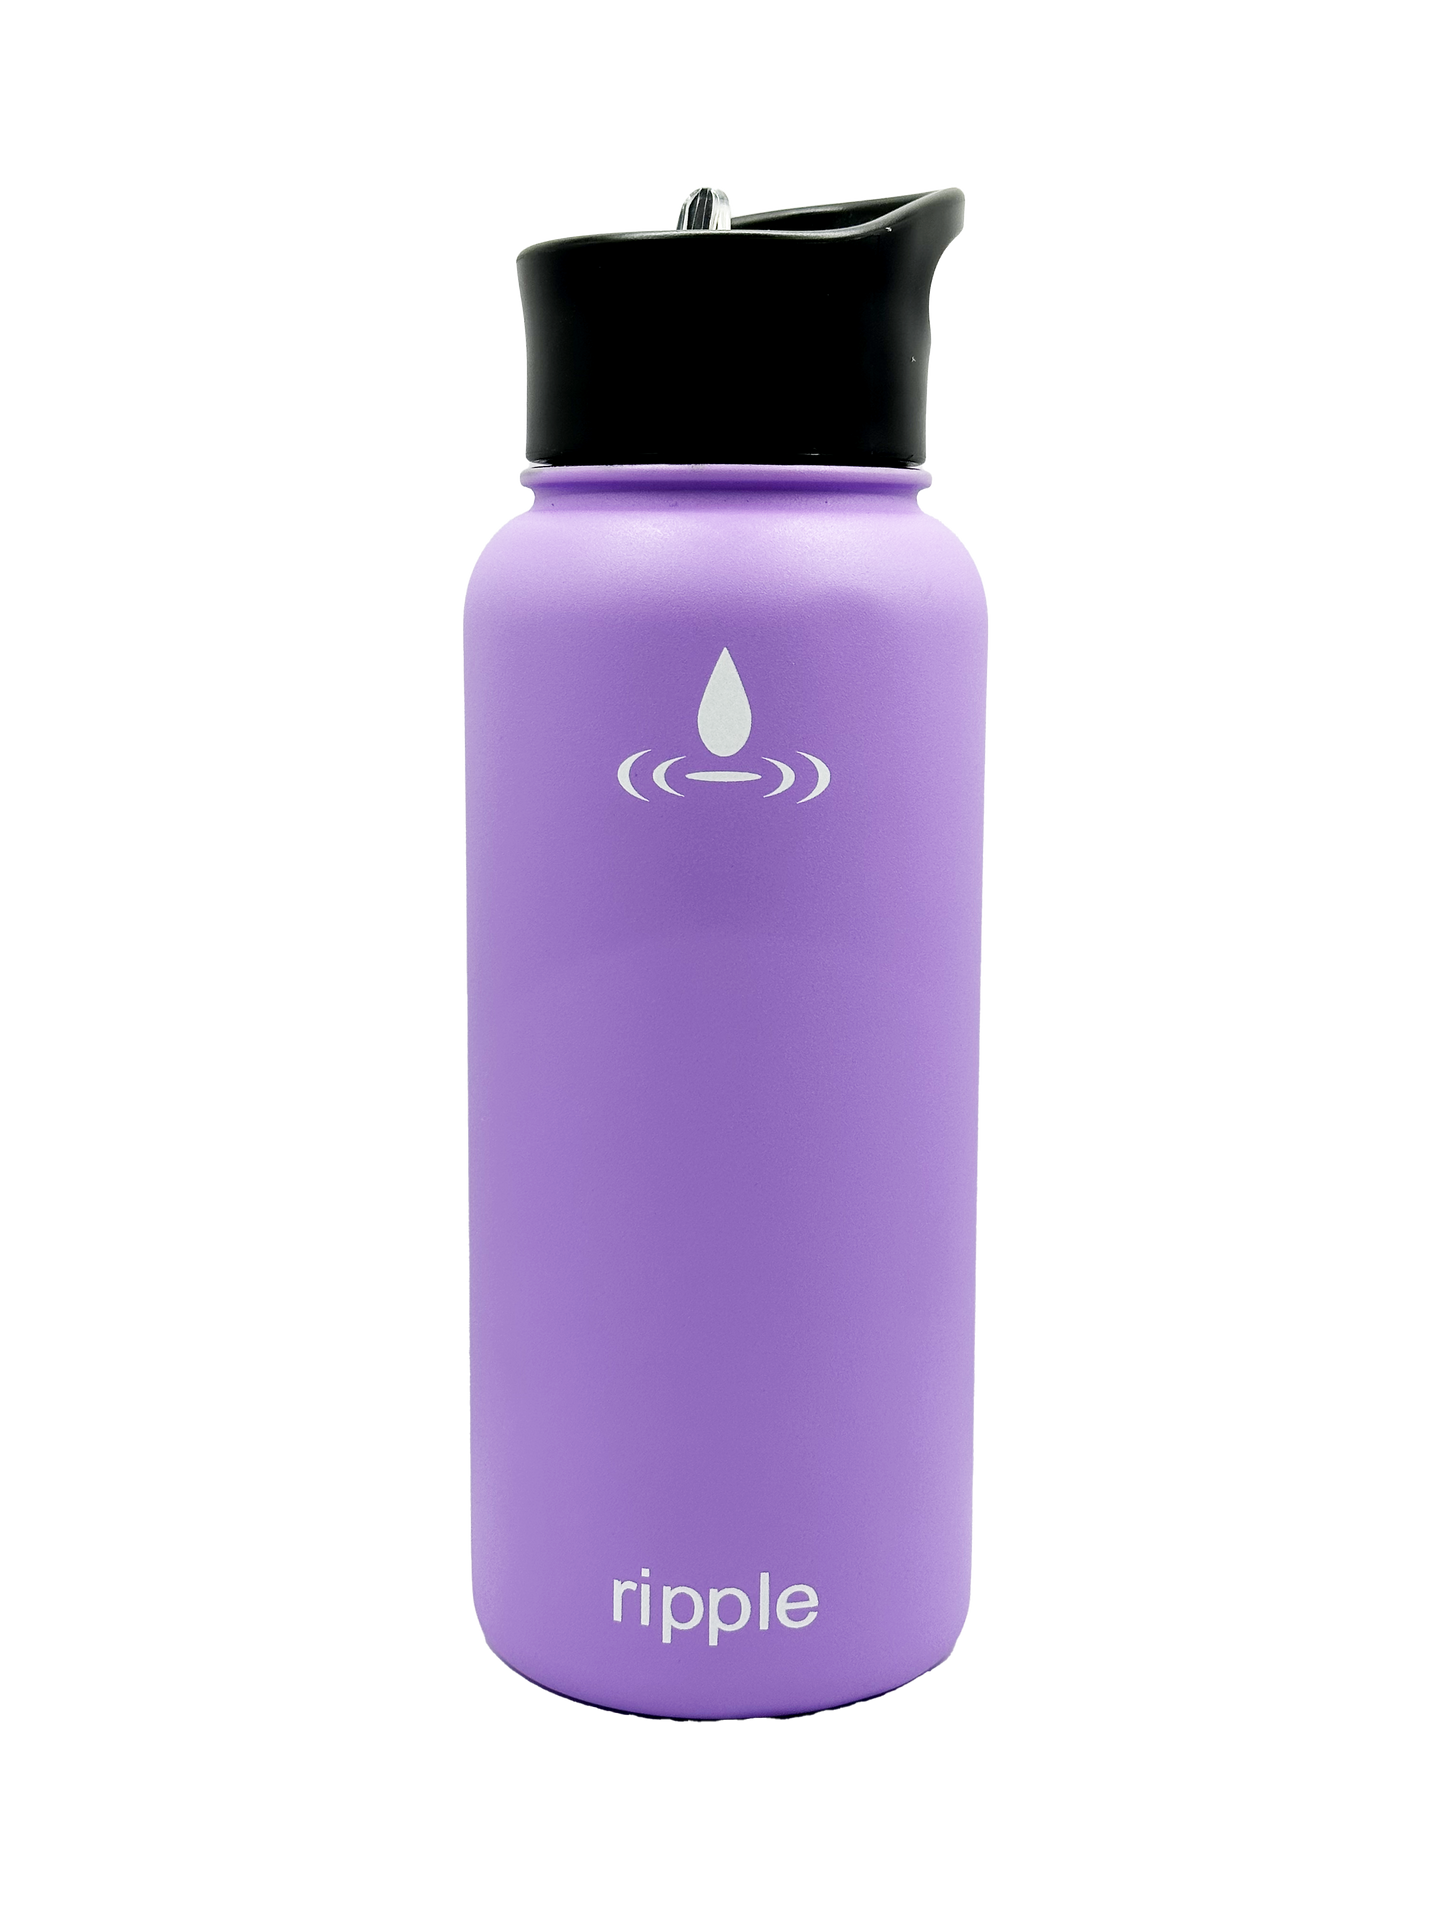 32 Oz. Lavender Ripple Bottle – We Are The Ripple